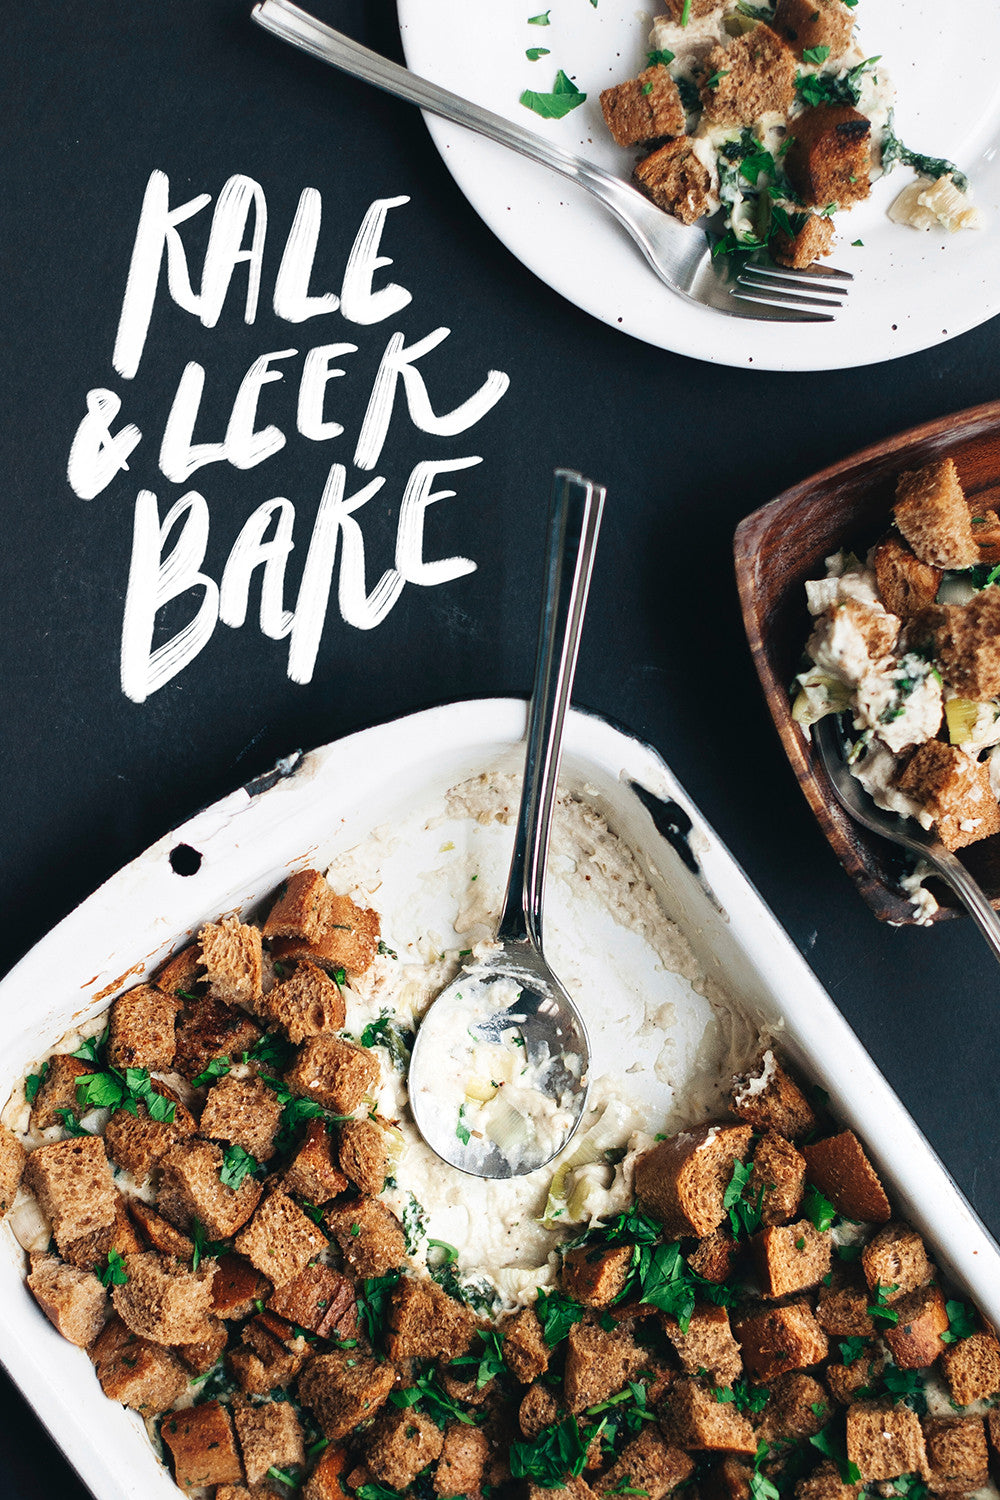 vegan kale & leek bake from smith & daughters cookbook